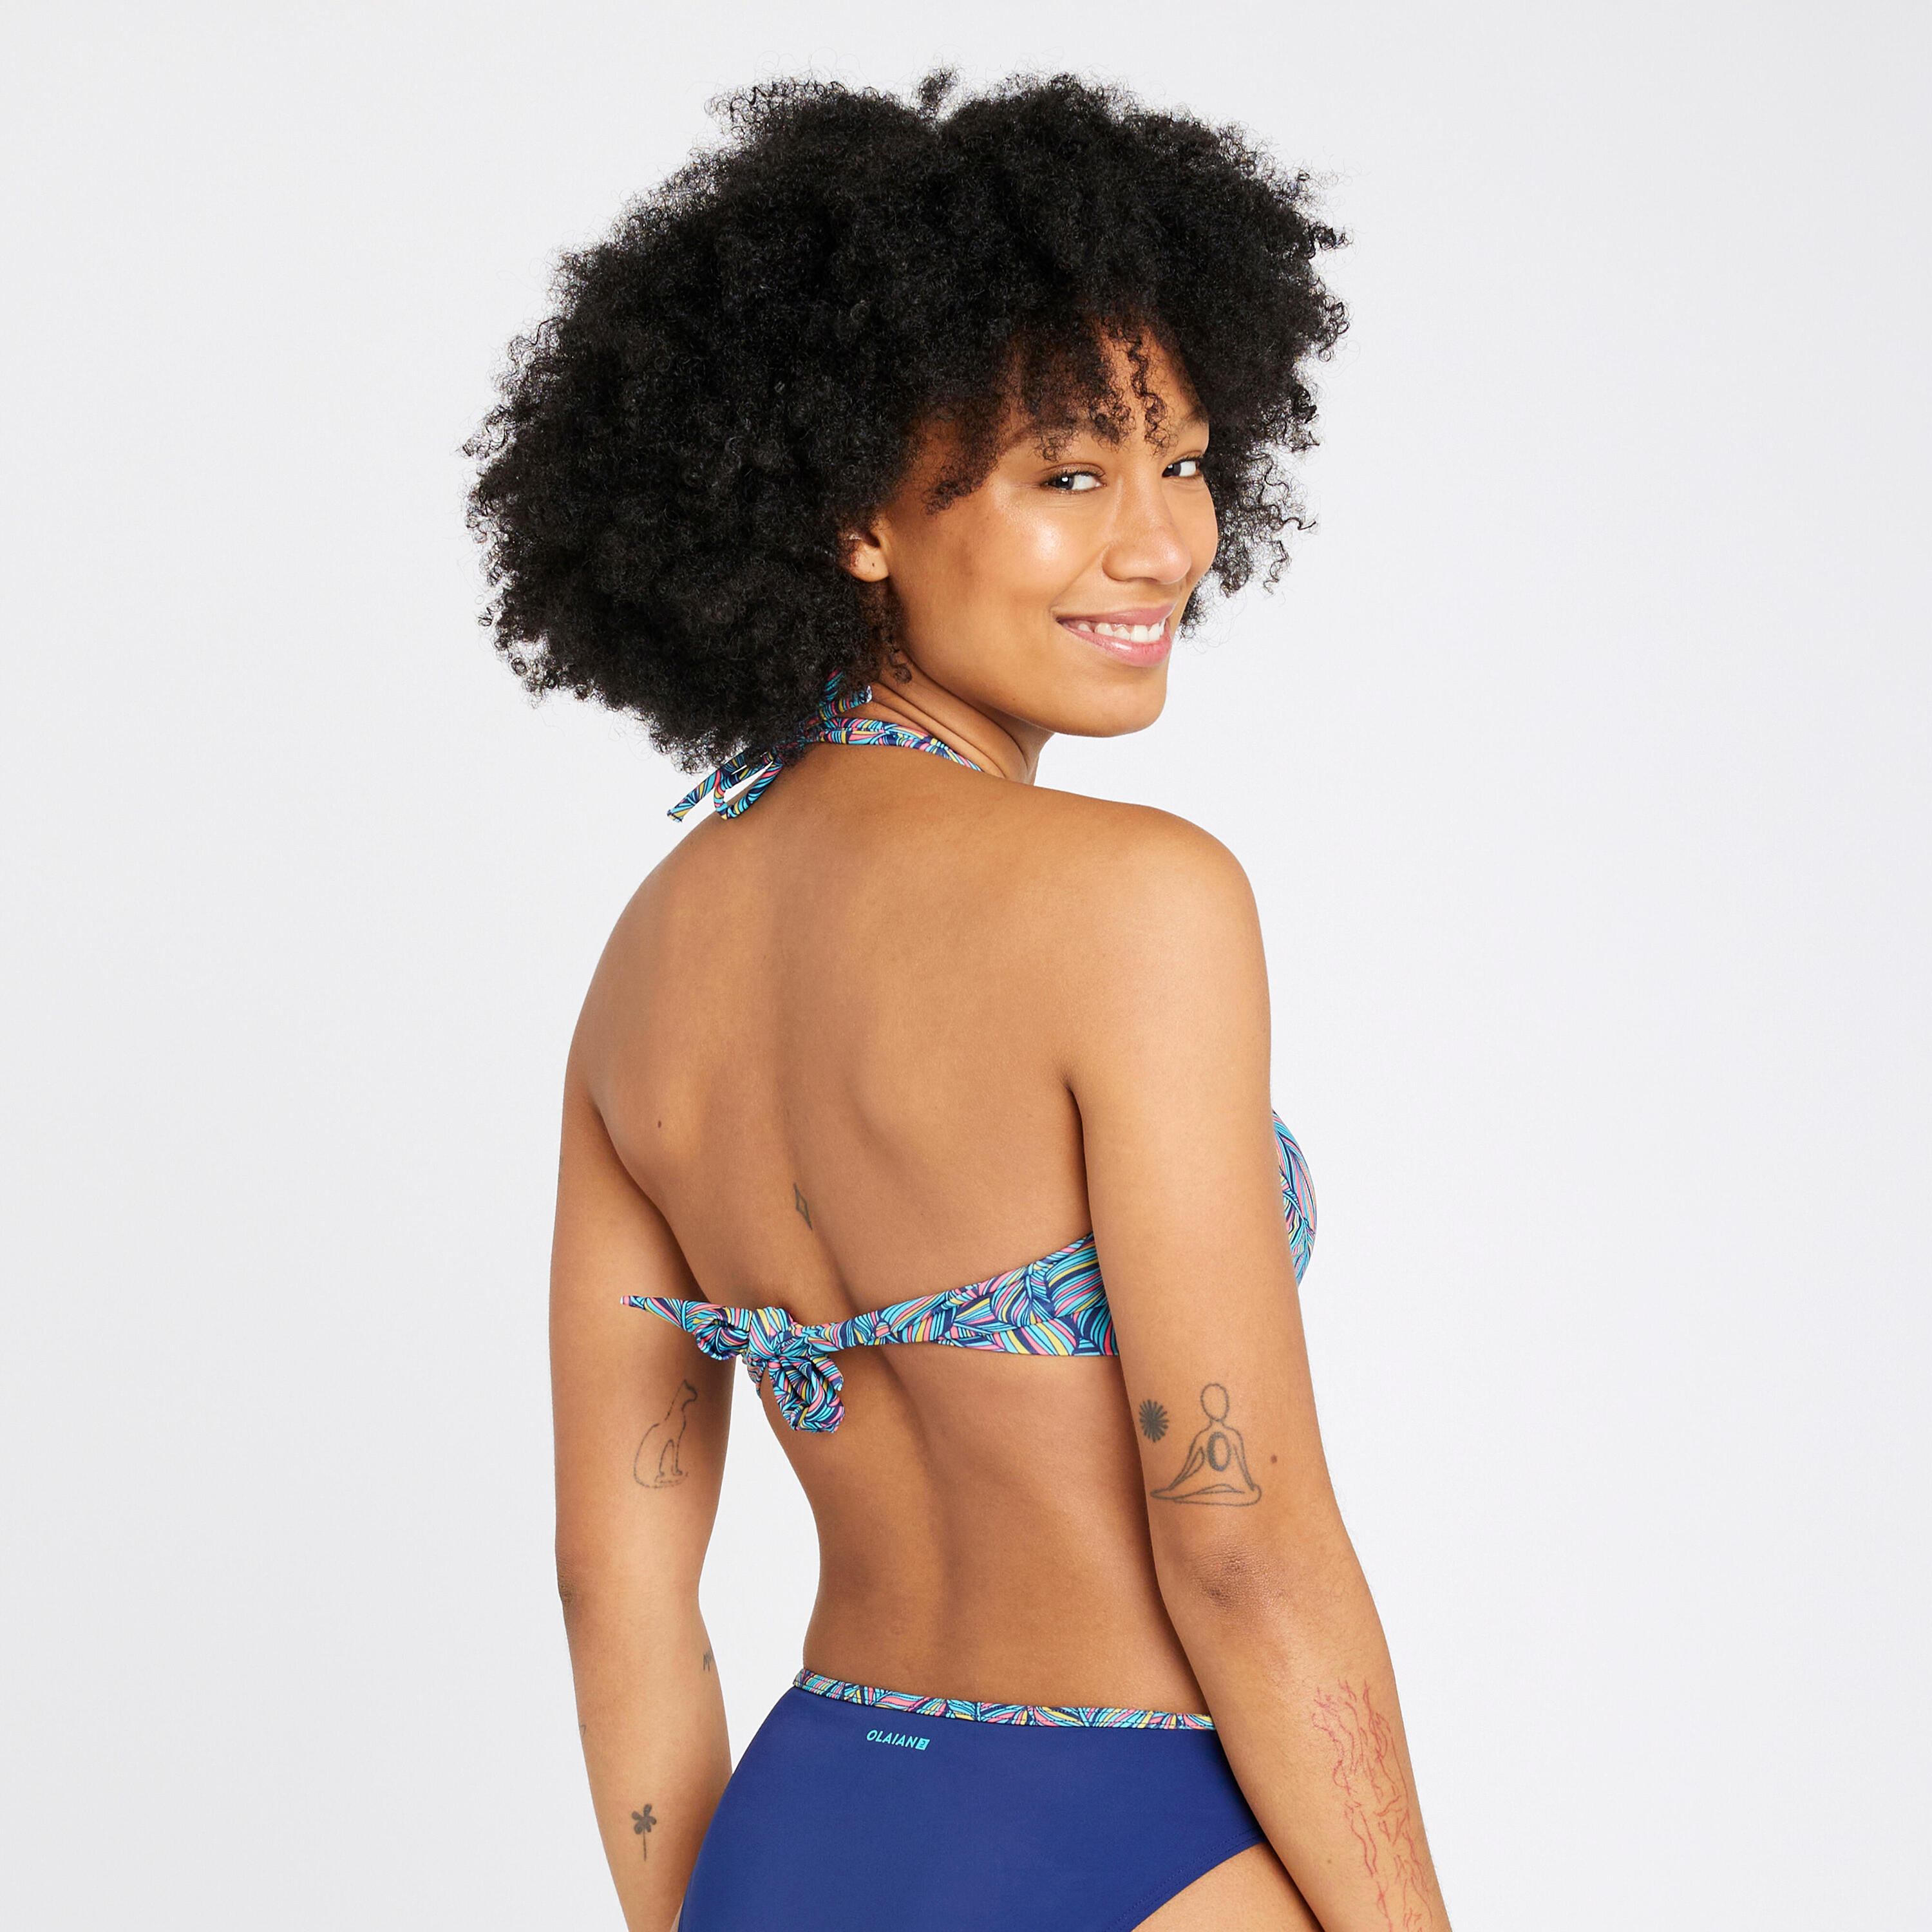 Women's briefs swimsuit bottoms - Nina foly blue 4/4